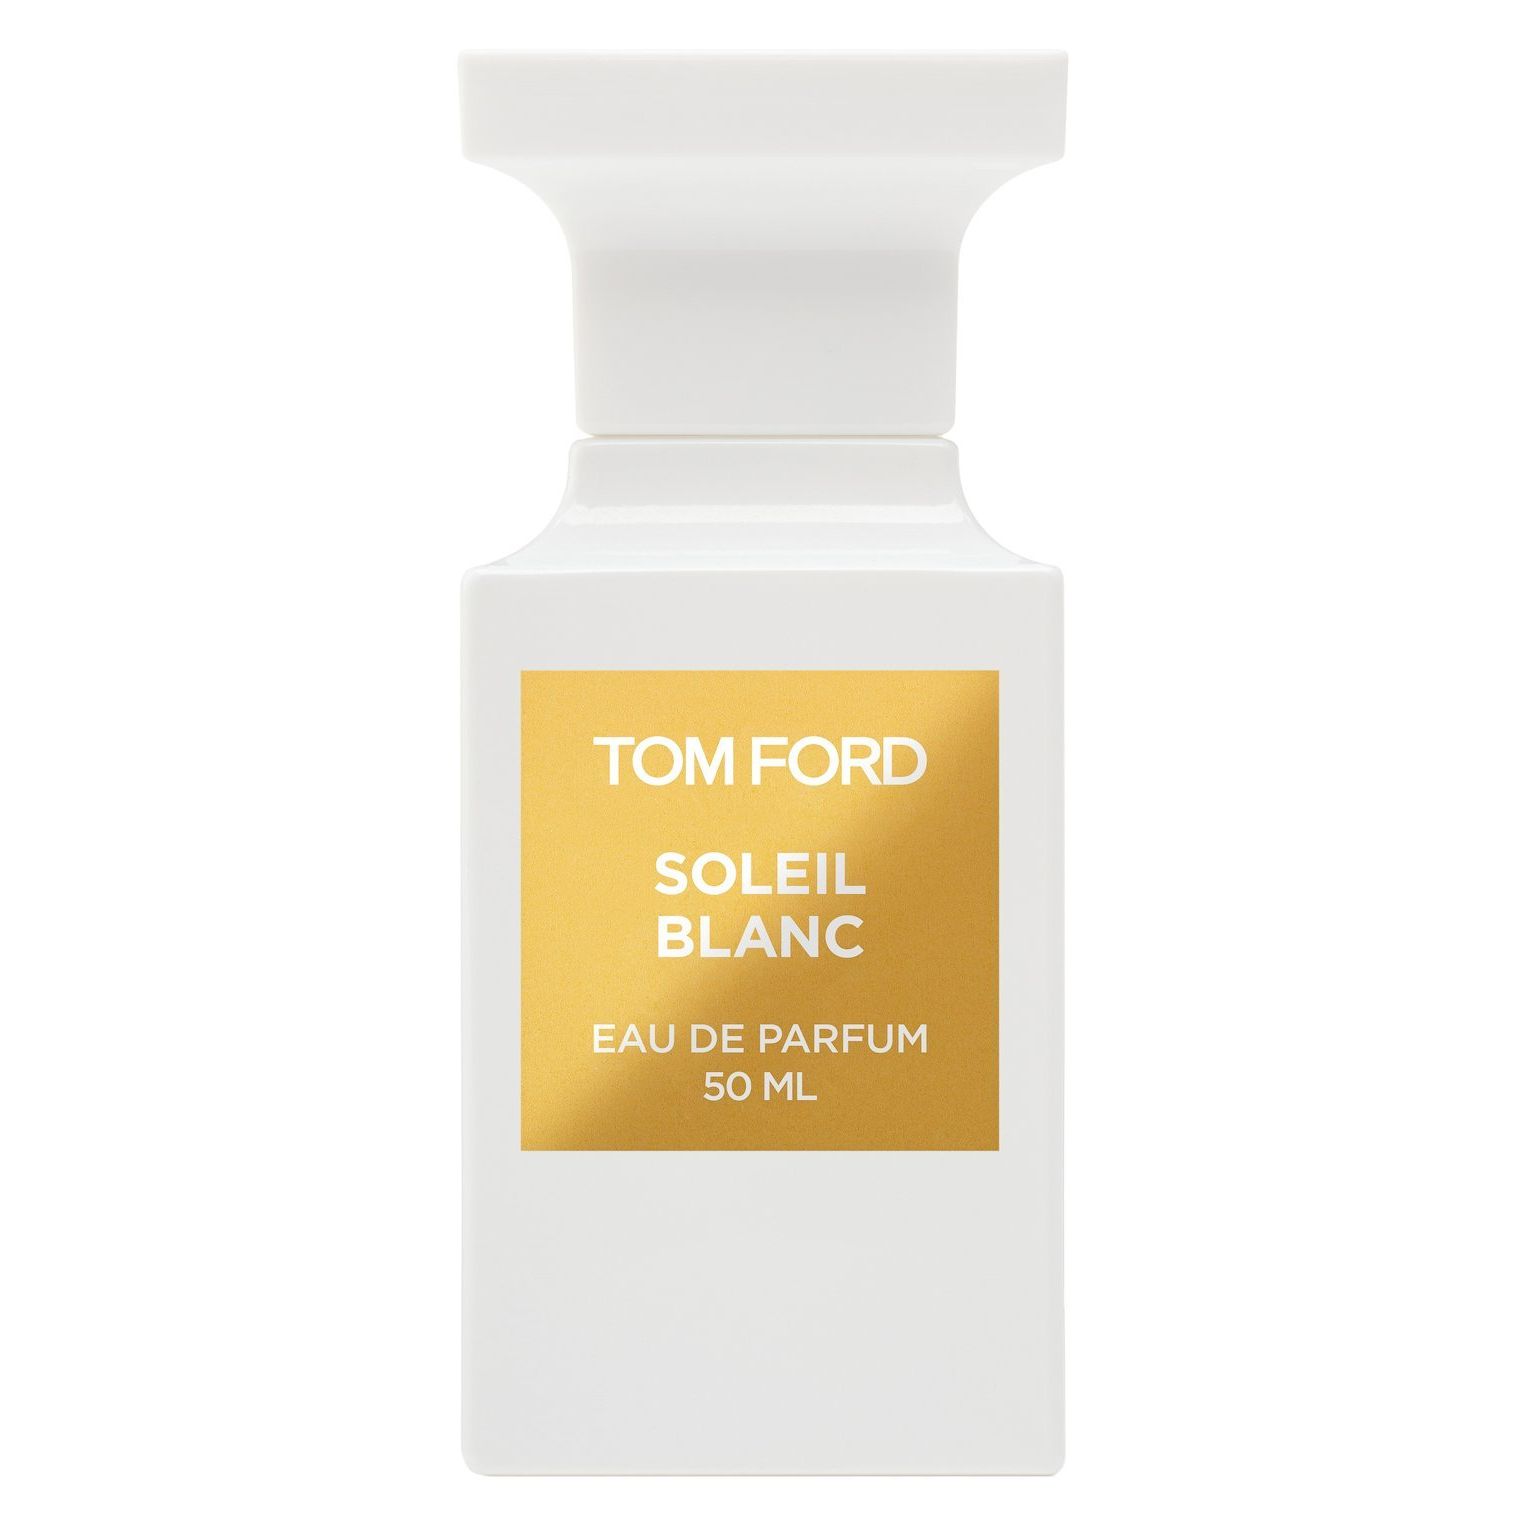 Вода парфюмерная Tom Ford Soleil Blanc, унисекс, 50 мл tom ford румяна хайлайтер soleil sheer cheek duo